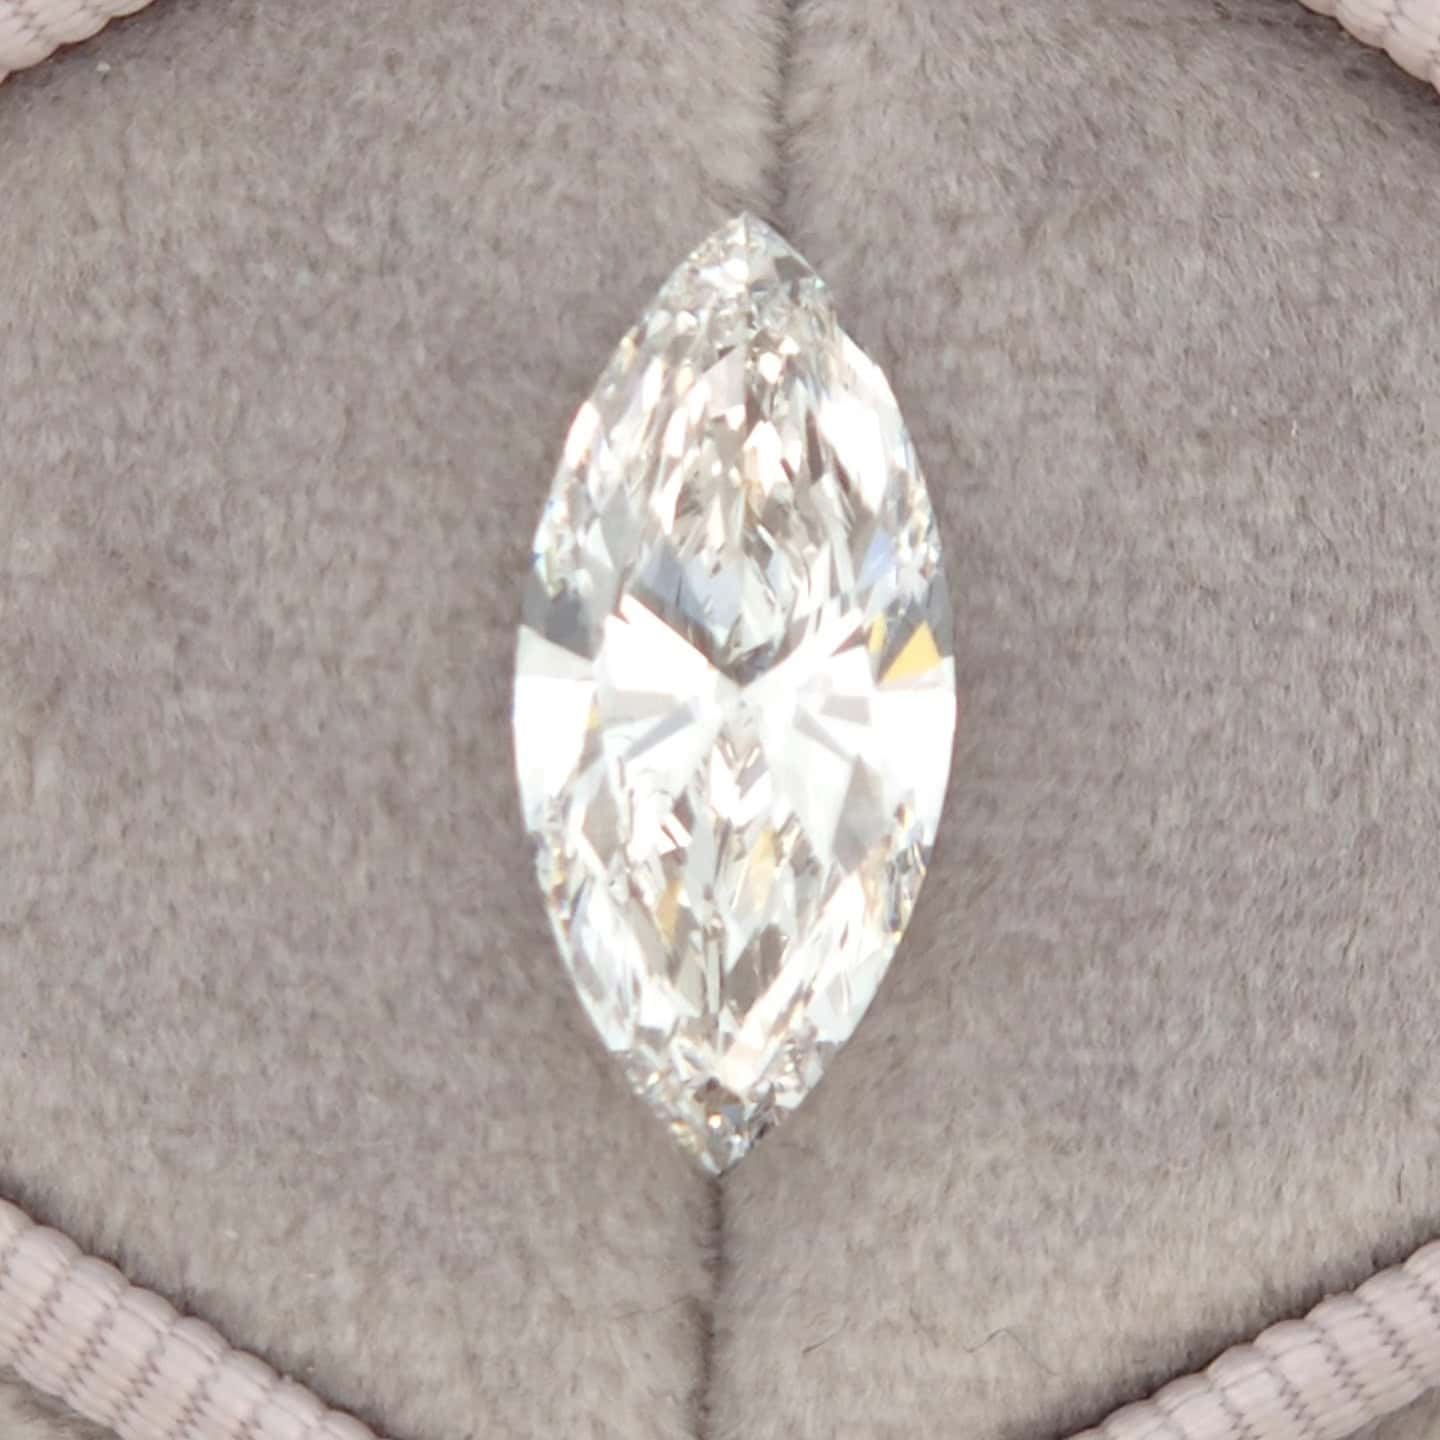 Lowest Price Eco Diamond - 2.48 ct Marquise G-VS1 IGI LG605329904 - Excellent symmetry, Excellent polish.